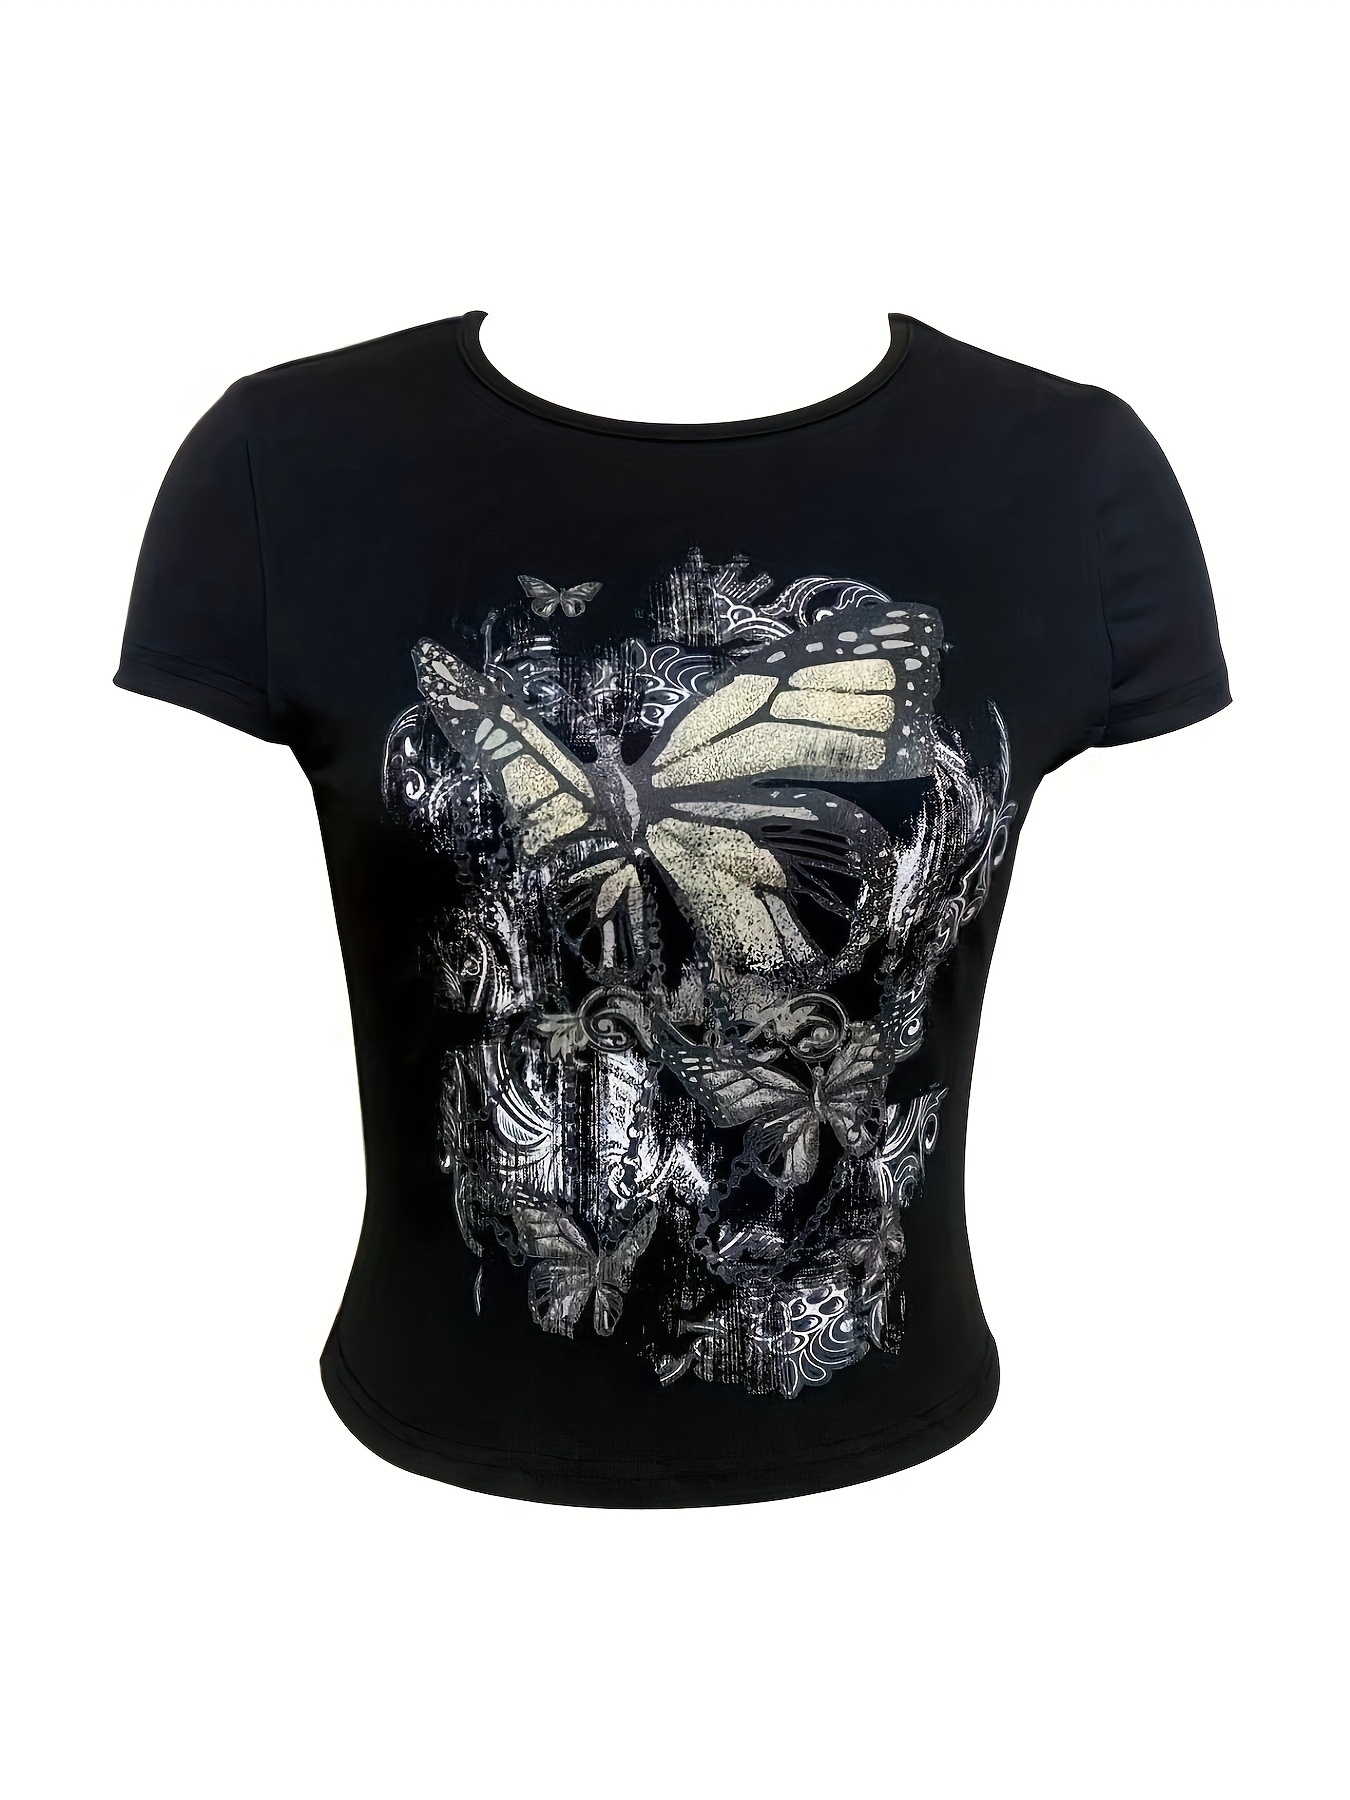 Brandy Melville Slit Sleeve T-shirts for Women